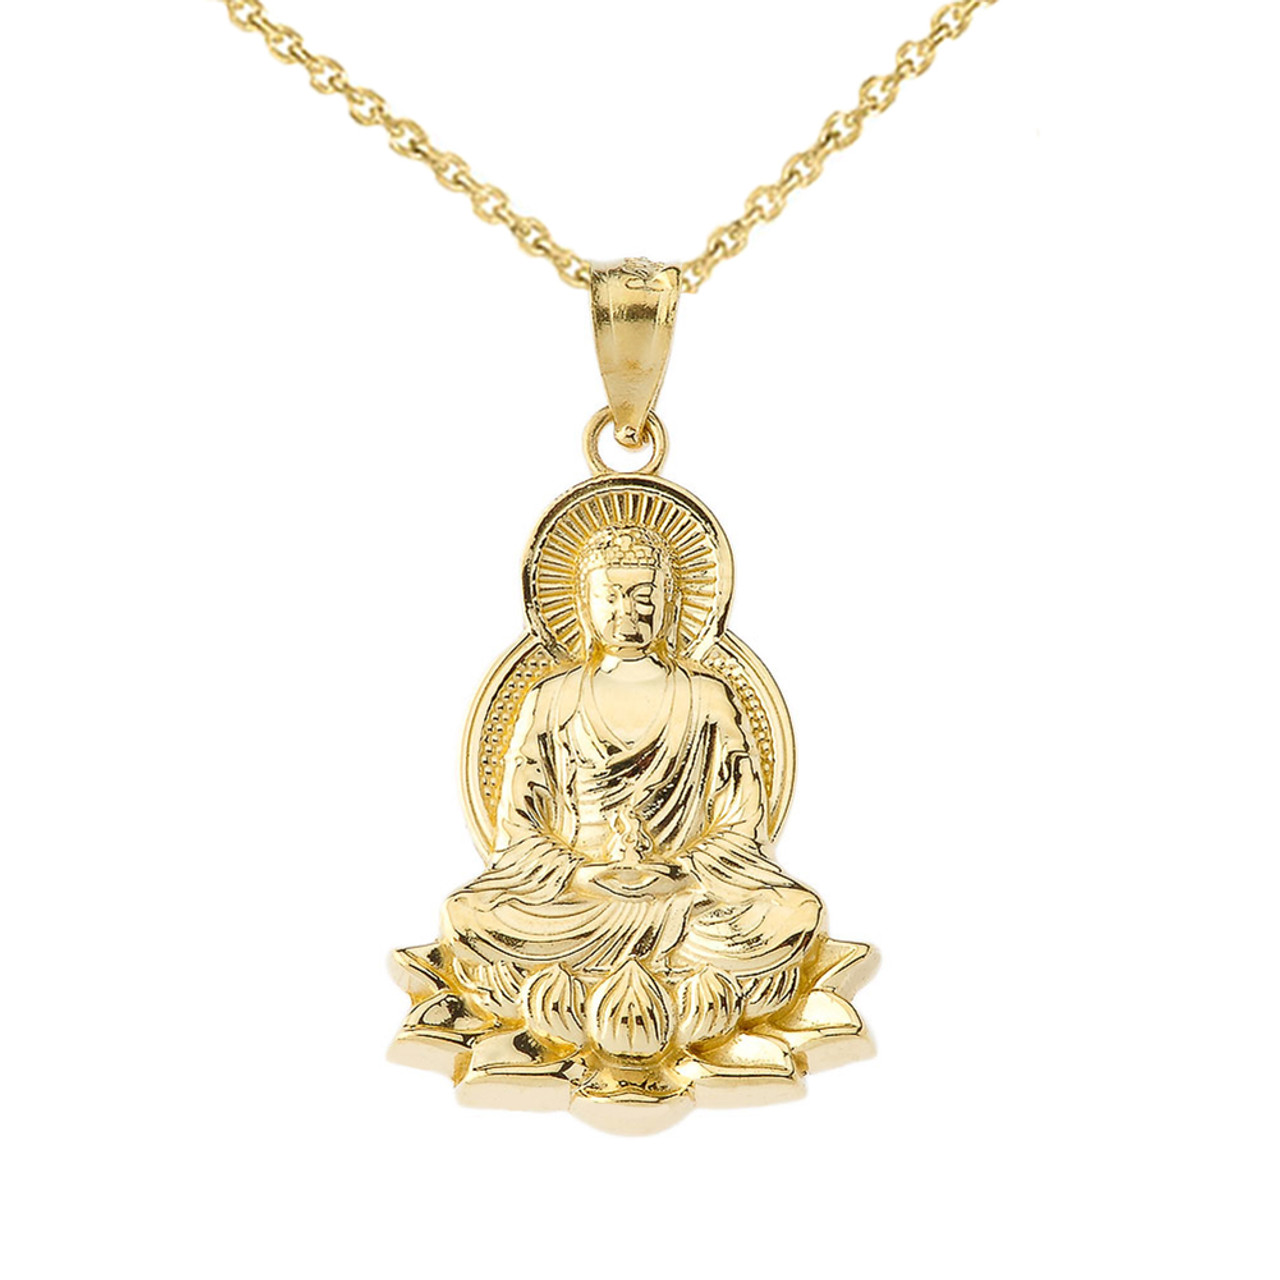 Sri Yantra Pendant Necklace - Lotus Blossom - Meditation Mantra Gold Lotus Blossom